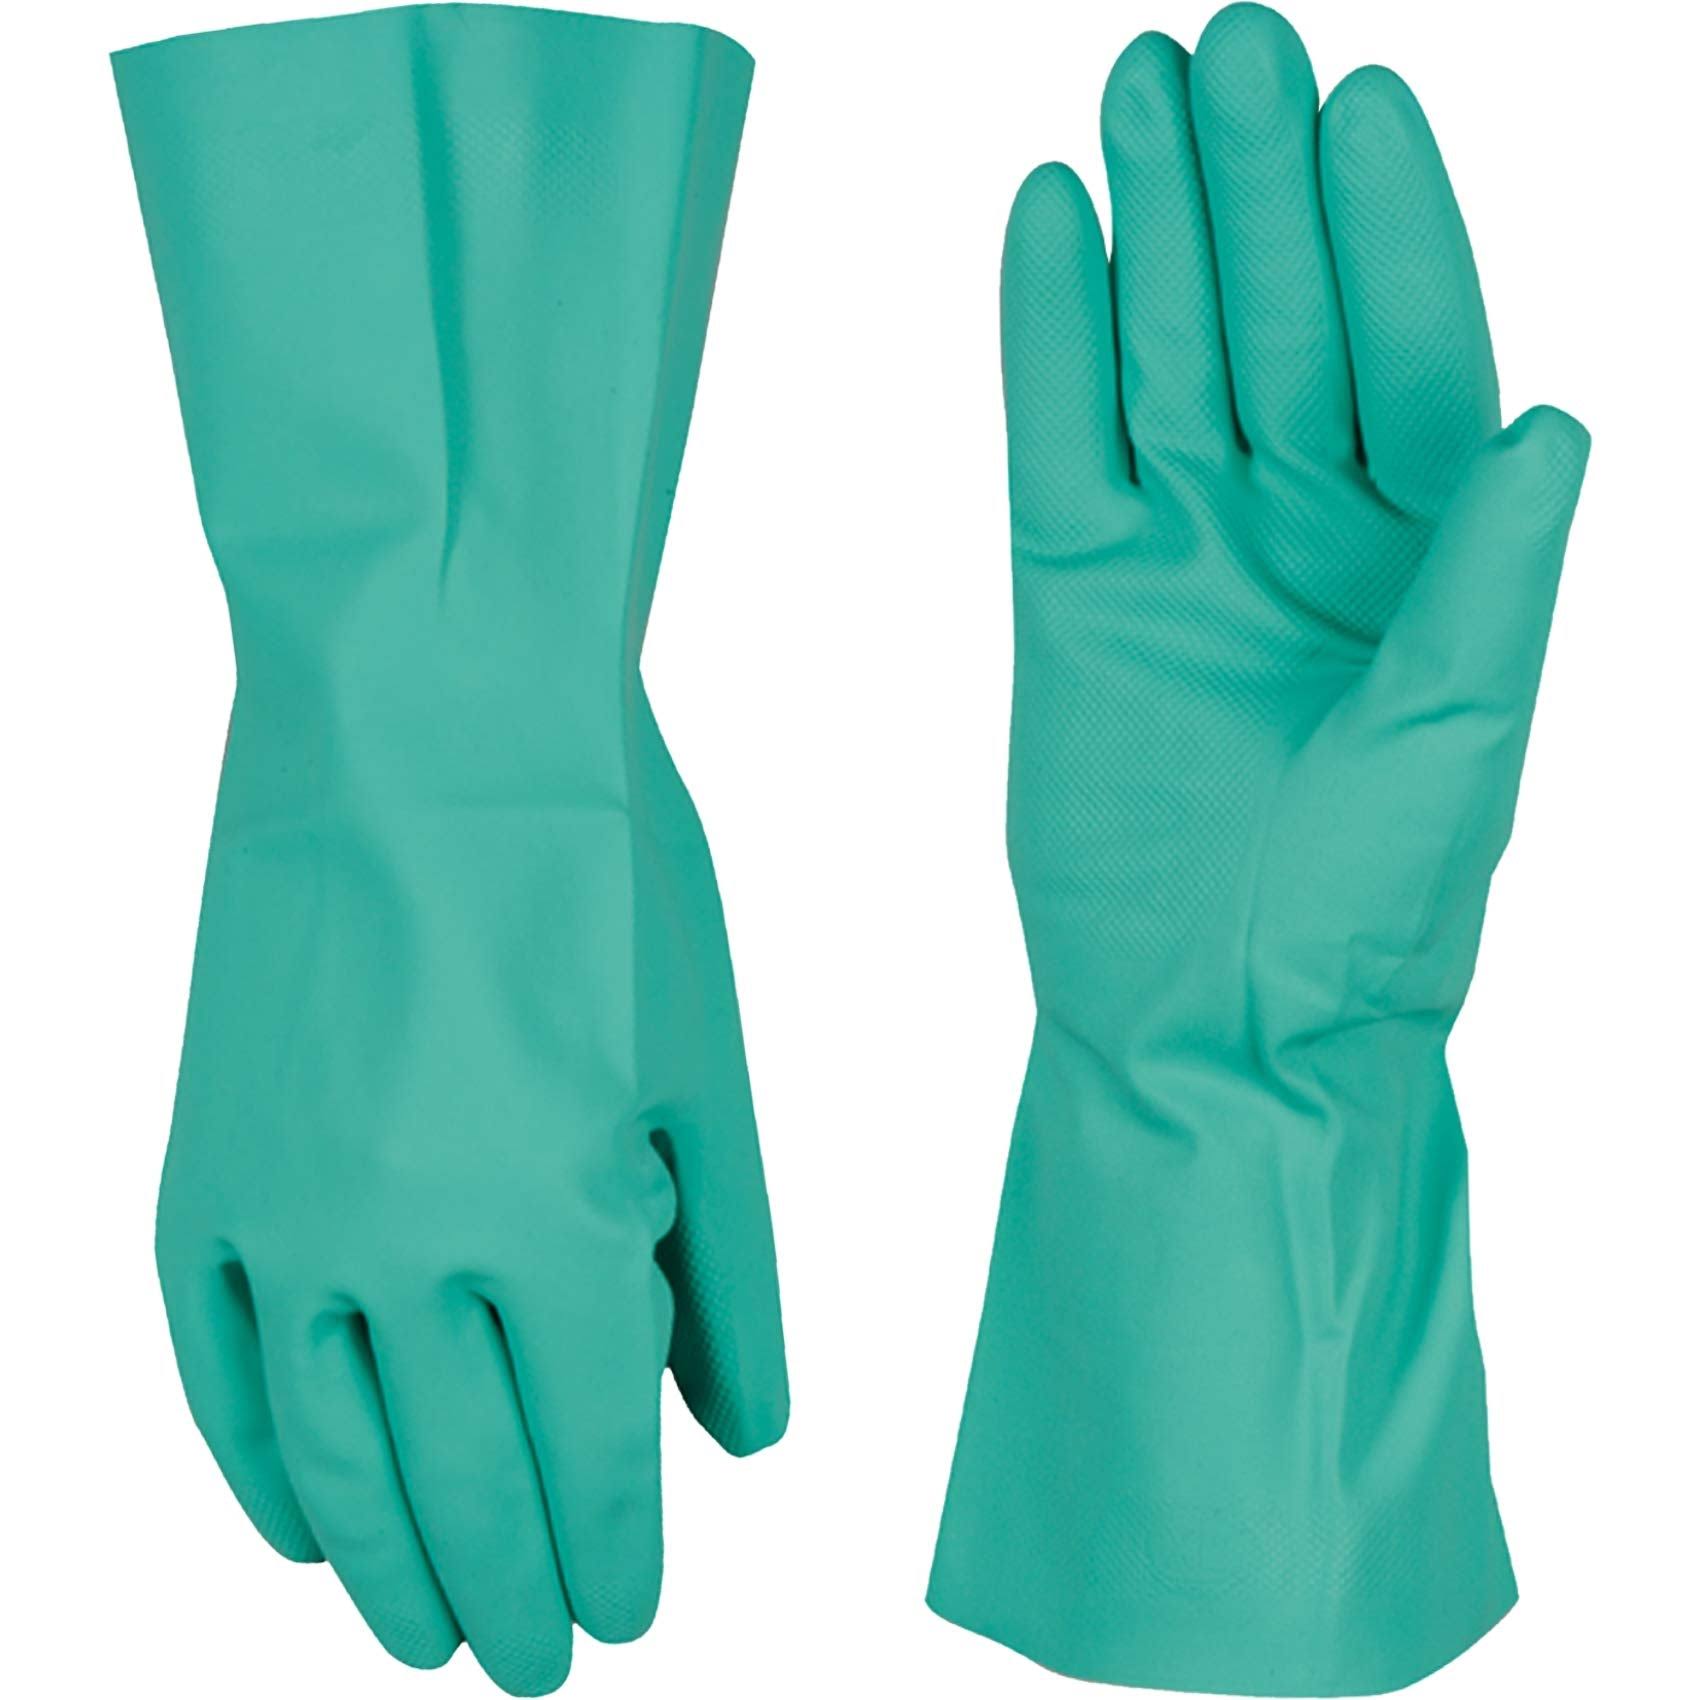 Wells Lamont Nitrile Coated Work Gloves - Green, 13"